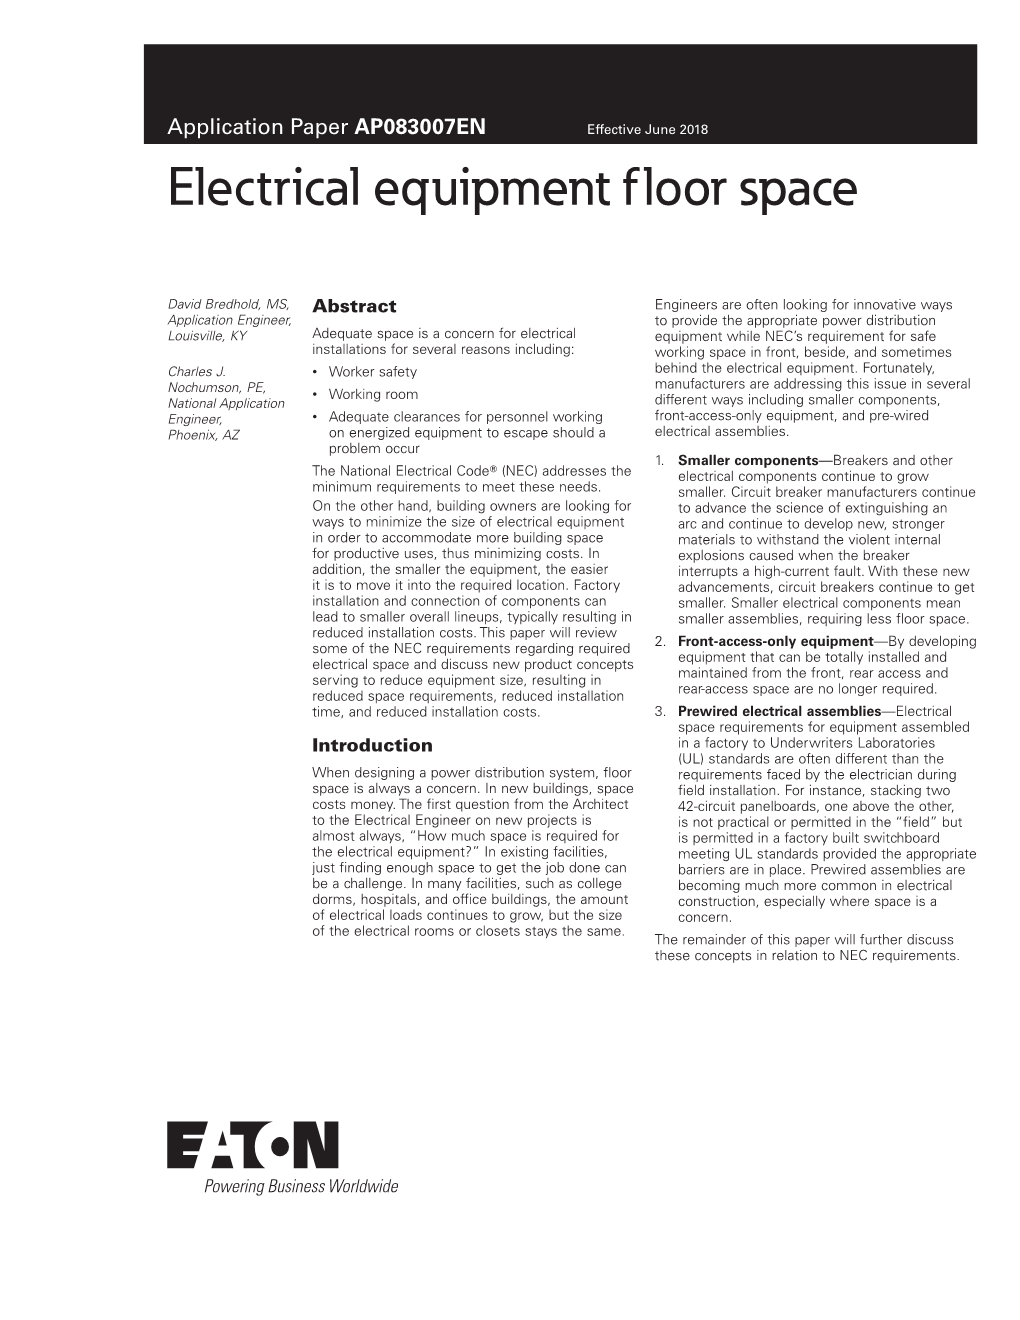 Electrical Equipment Floor Space